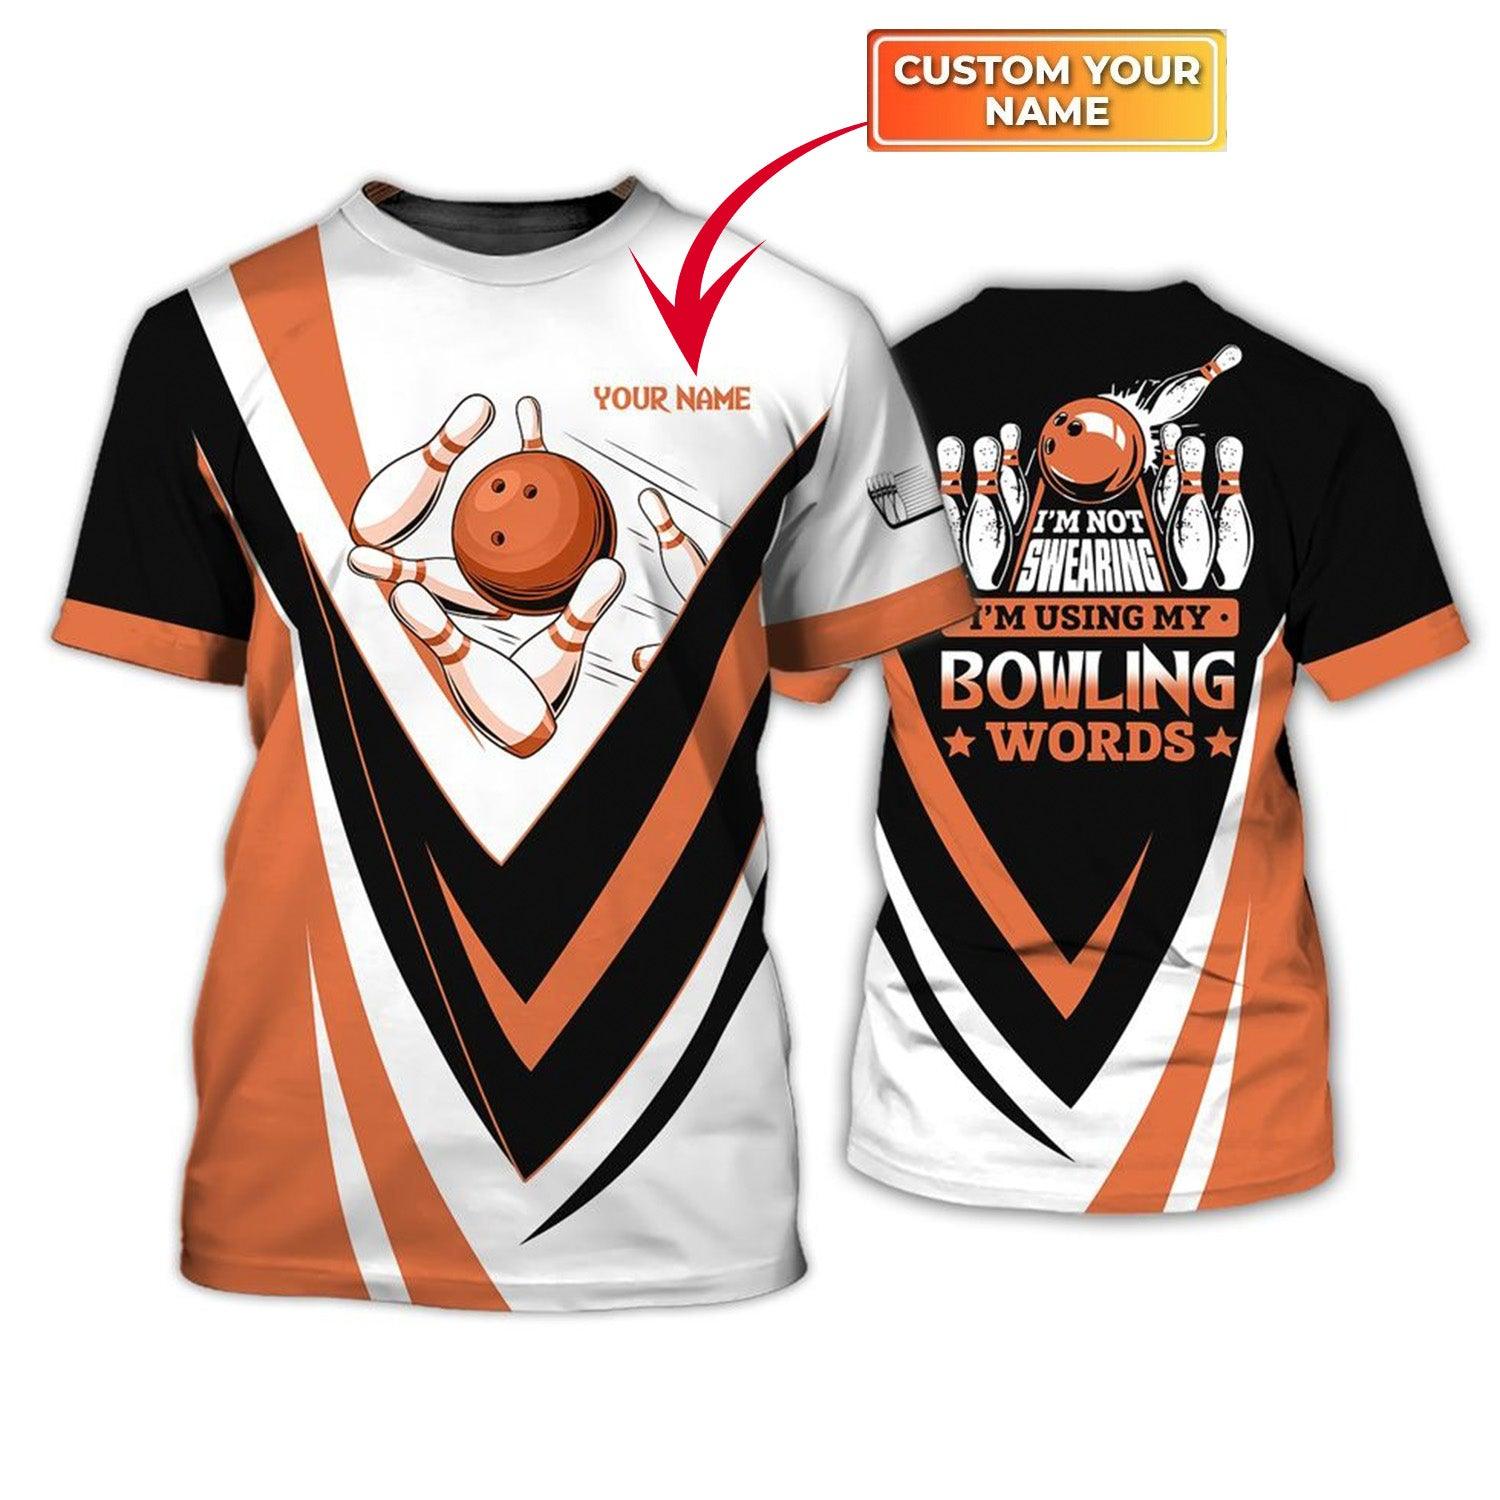 Customized Name Bowling T Shirt, Personalized I'm Not Swearing Shirt, Funny Bowling T Shirts - Gift For Men, Women, Bowling Players, Bowlers - Amzanimalsgift